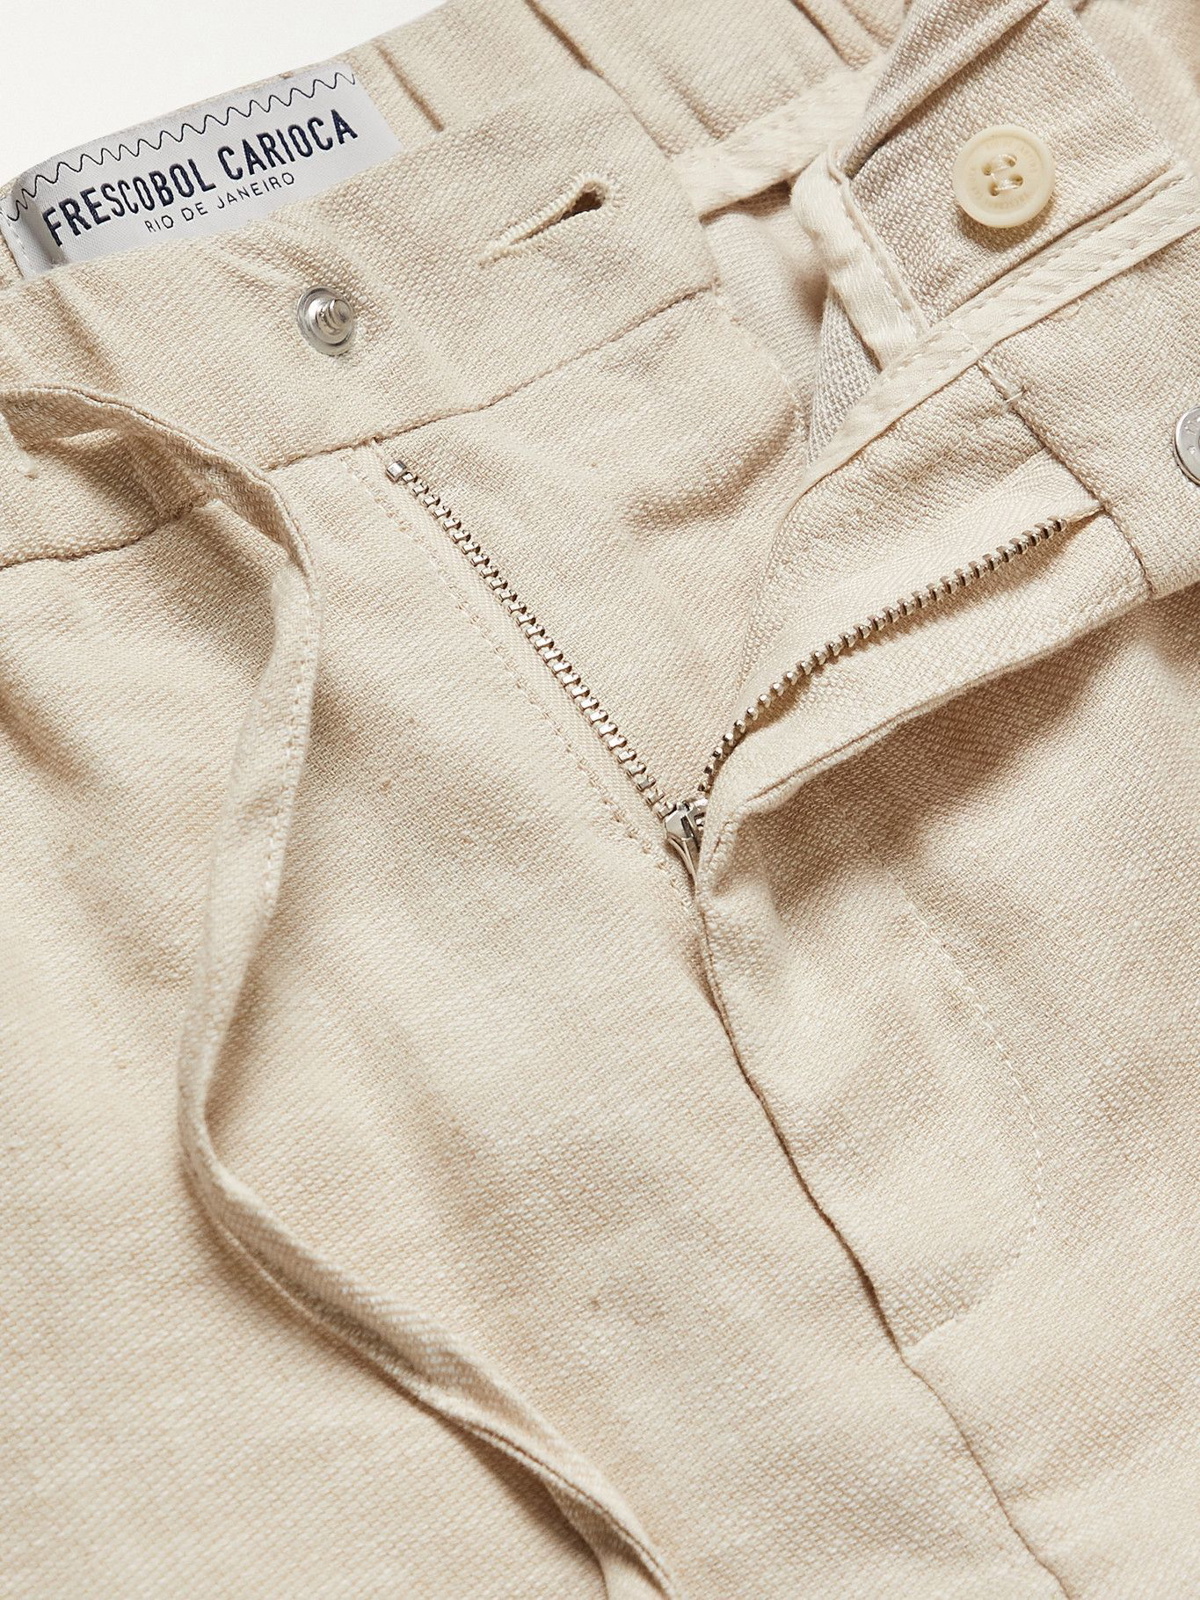 FRESCOBOL CARIOCA - Oscar Slim-Fit Tapered Linen and Cotton-Blend  Drawstring Trousers - Neutrals Frescobol Carioca